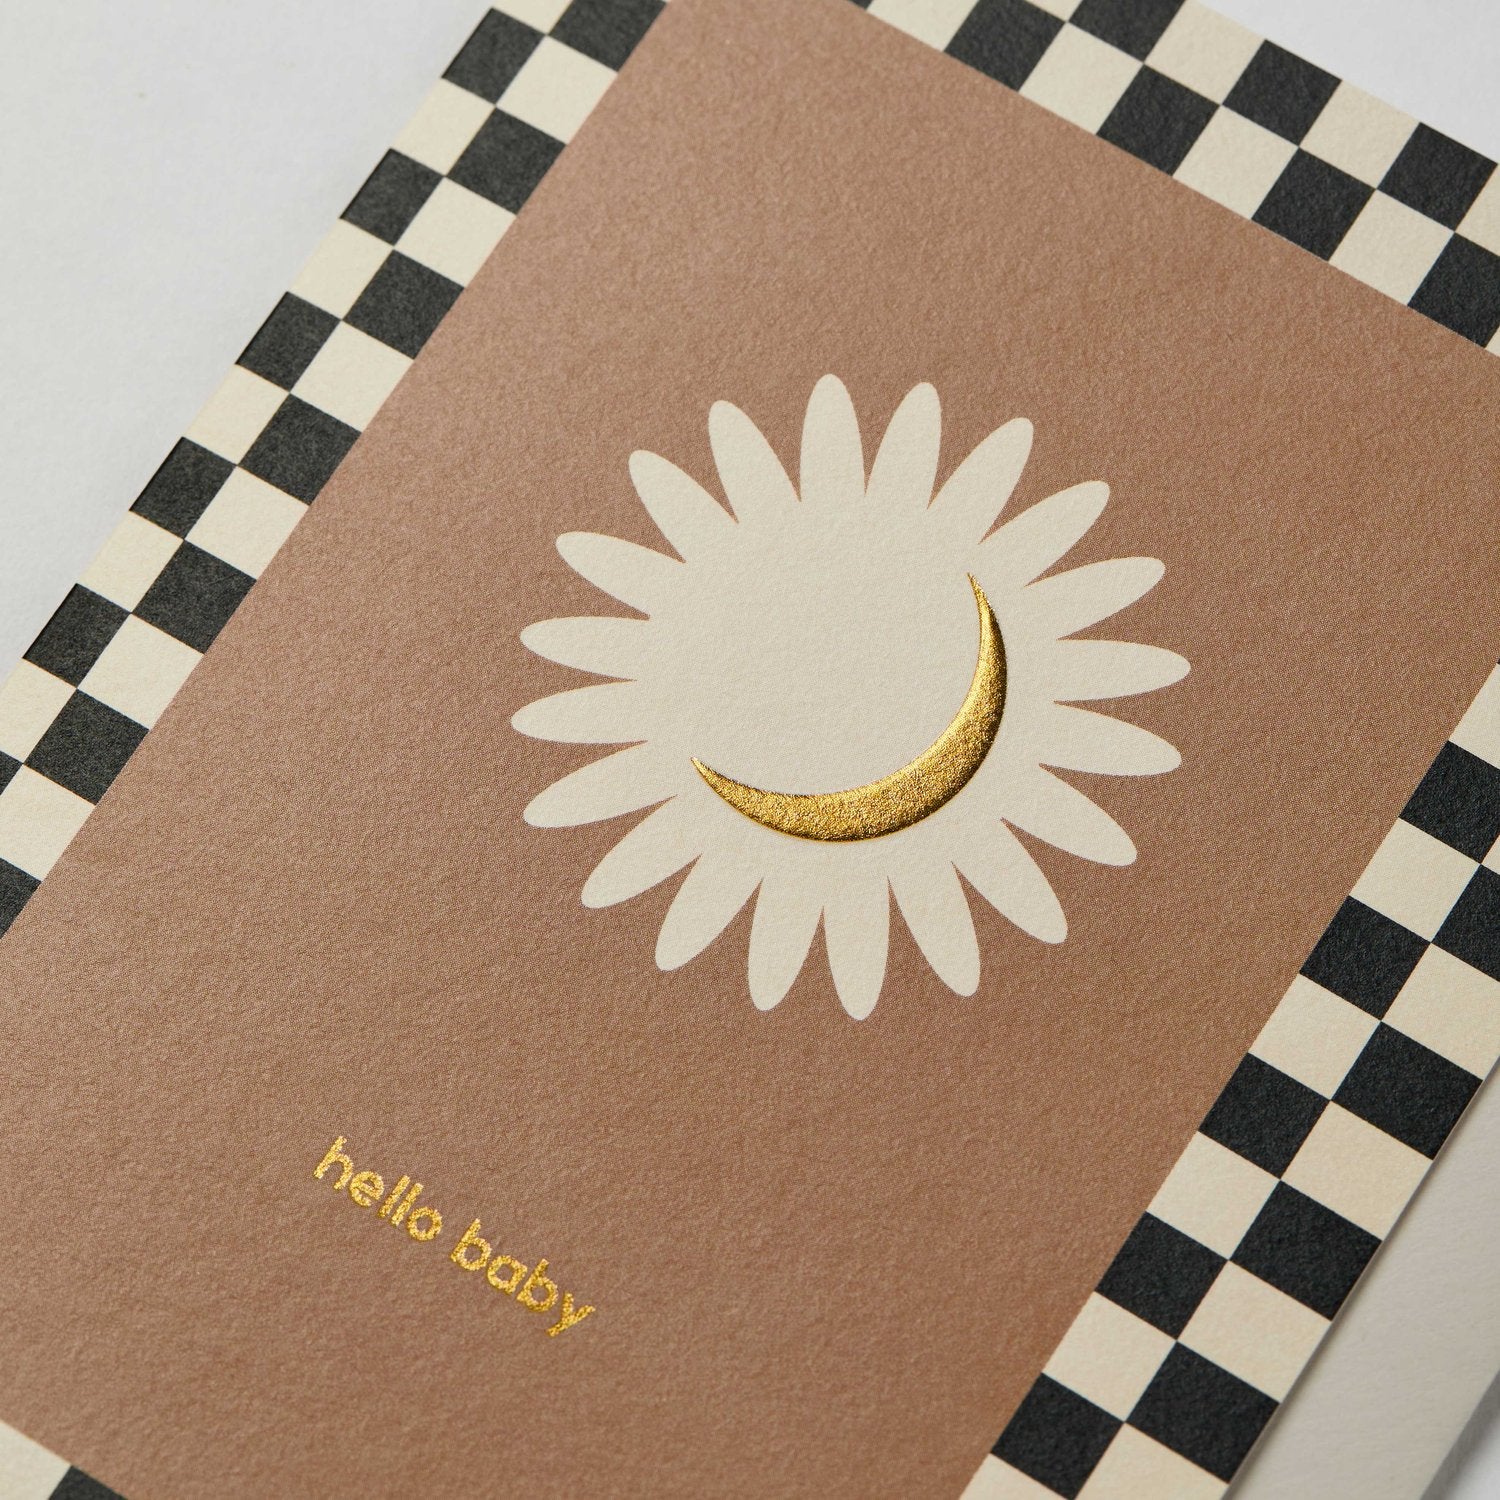 Hello Baby Moon Card | Blank Inside | by Kinshipped - Lifestory